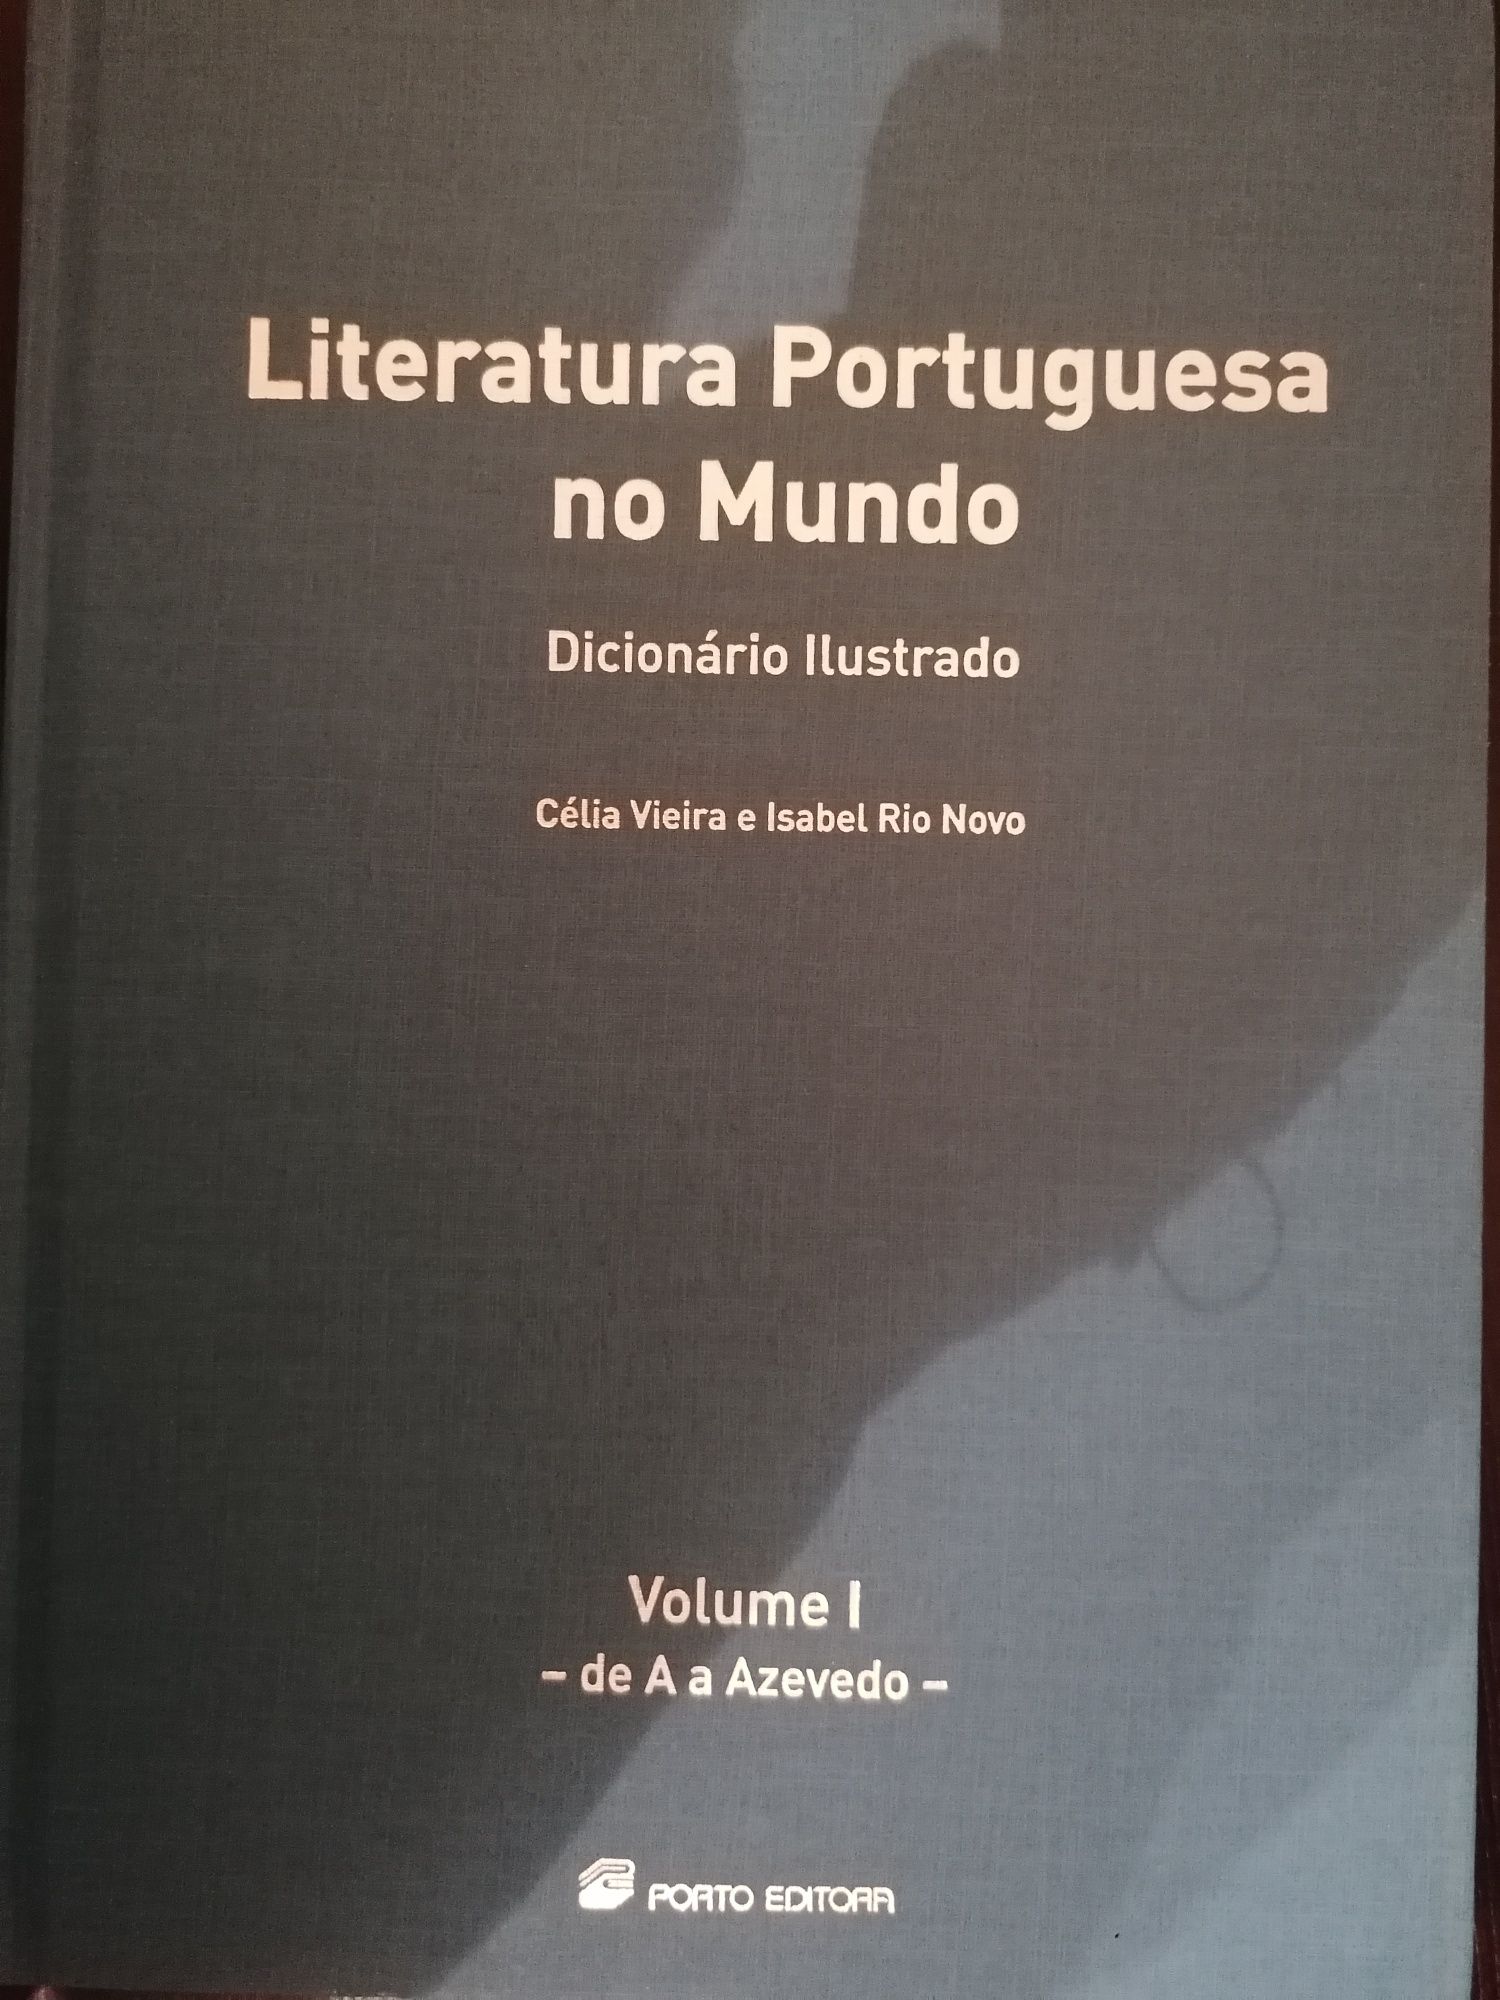 Enciclopédia Literatura portuguesa no mundo, 8 volumes, Porto editora